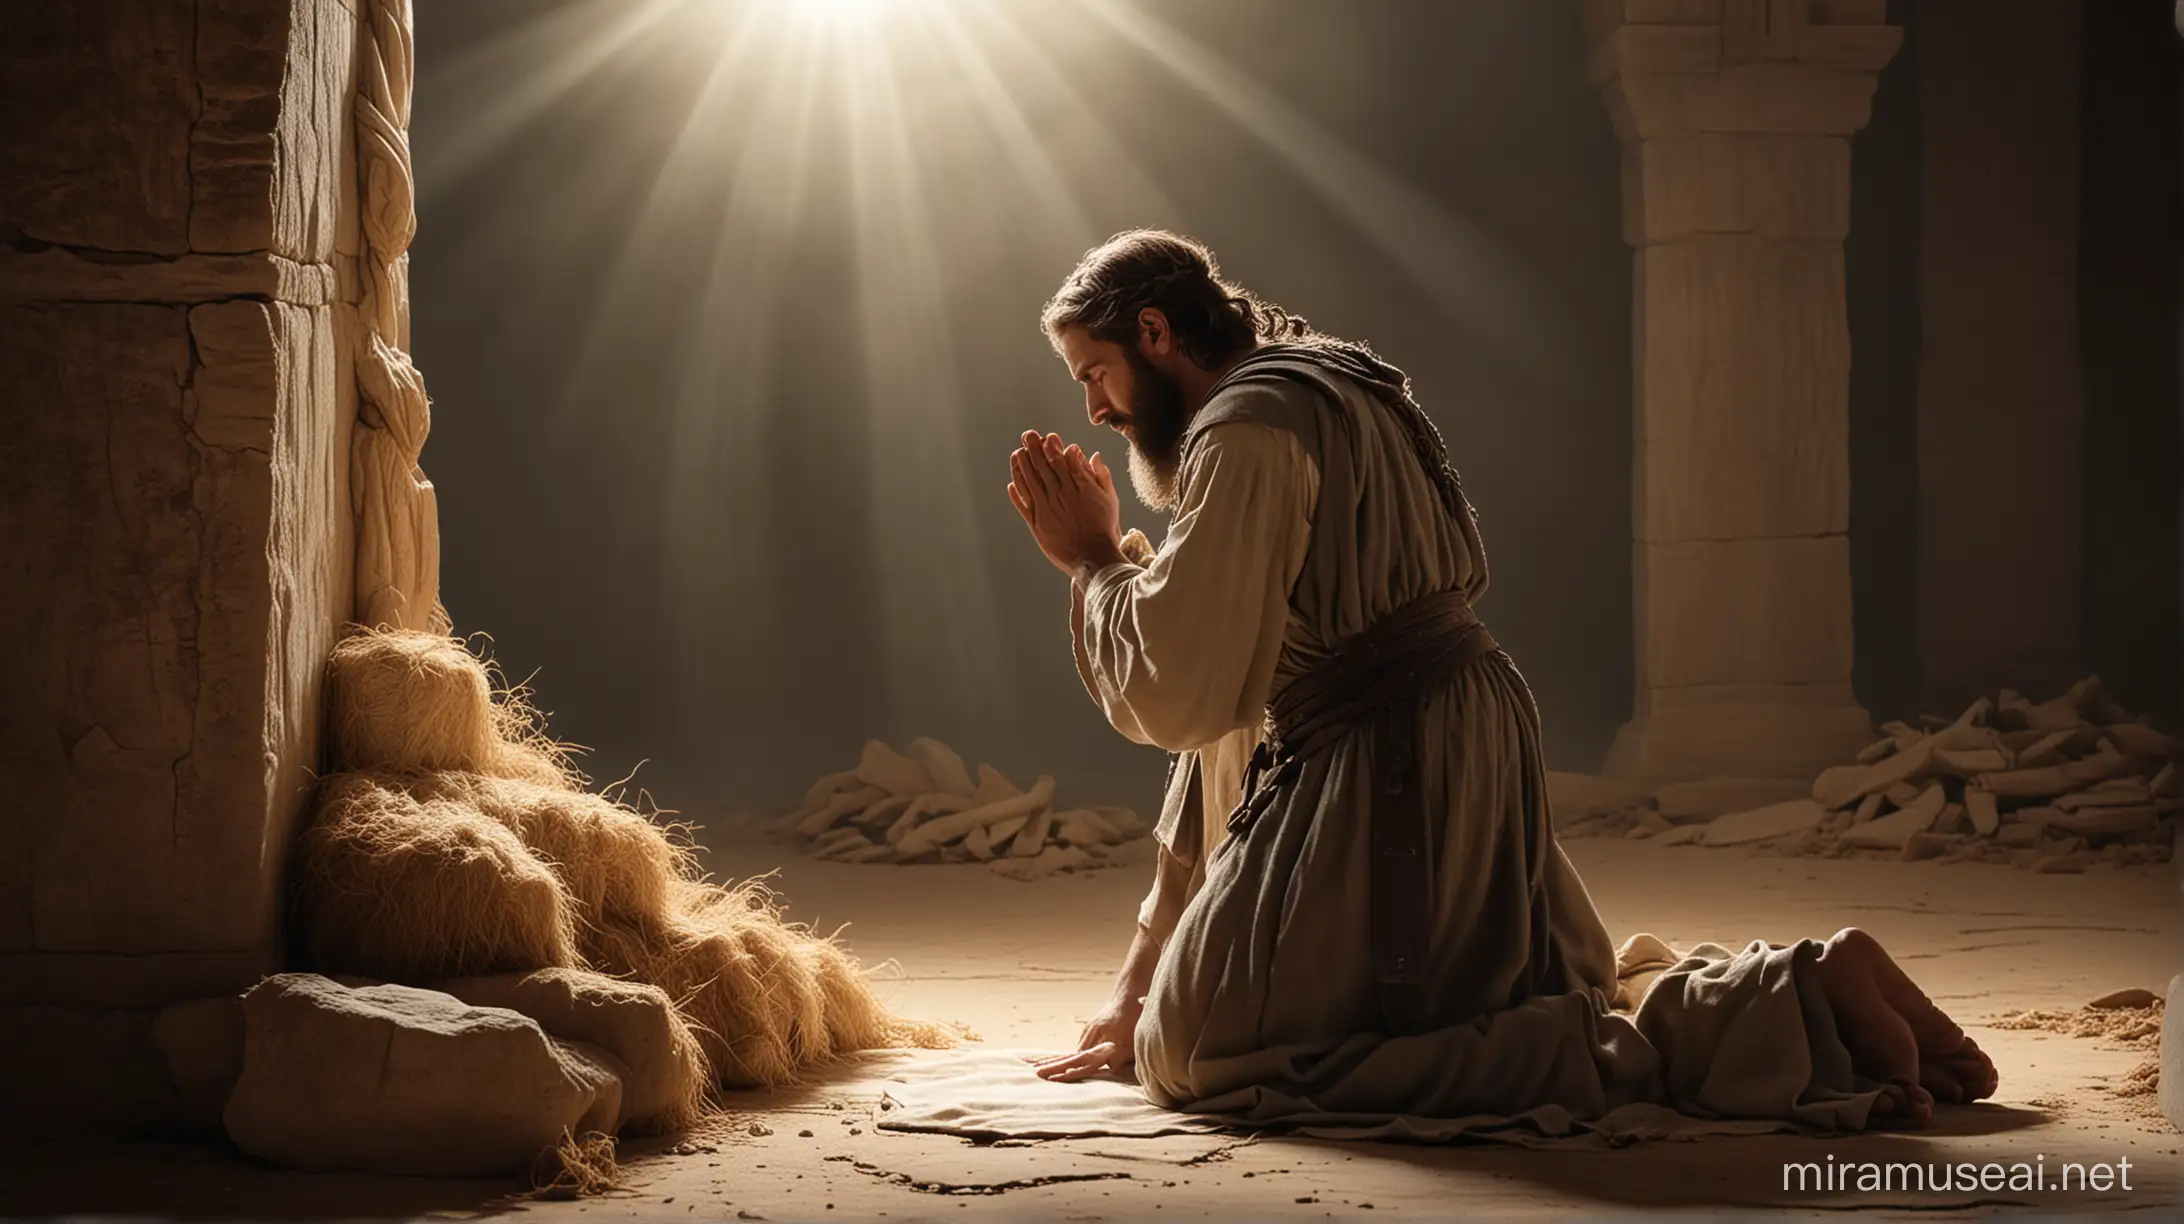 Enoch Praying Kneeling Biblical Character Seeking Guidance from God